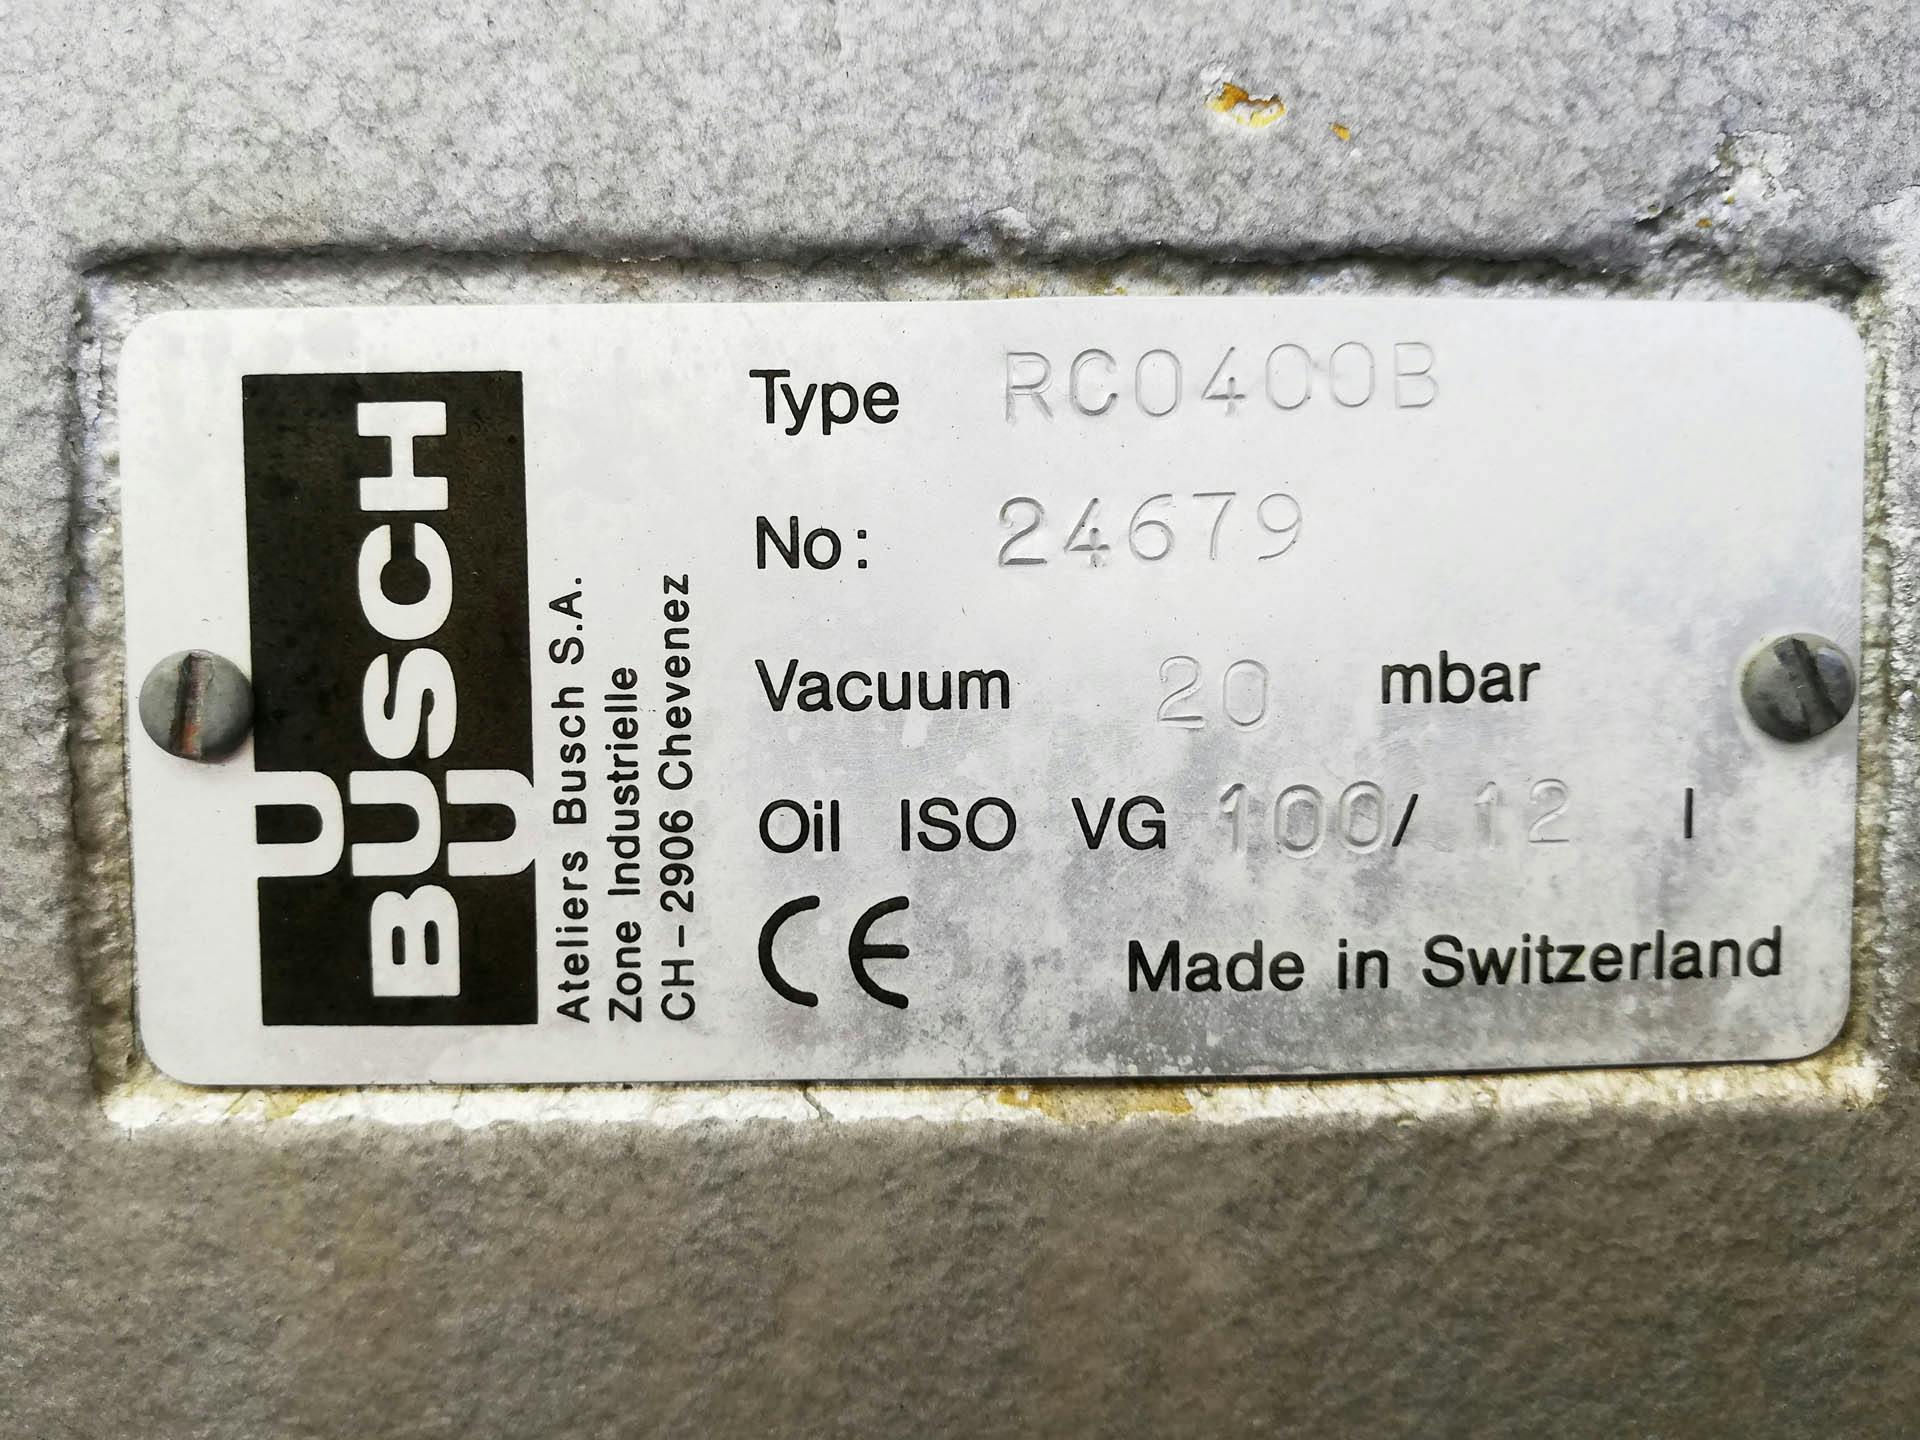 Busch RC0400B - Vacuum pump - image 5